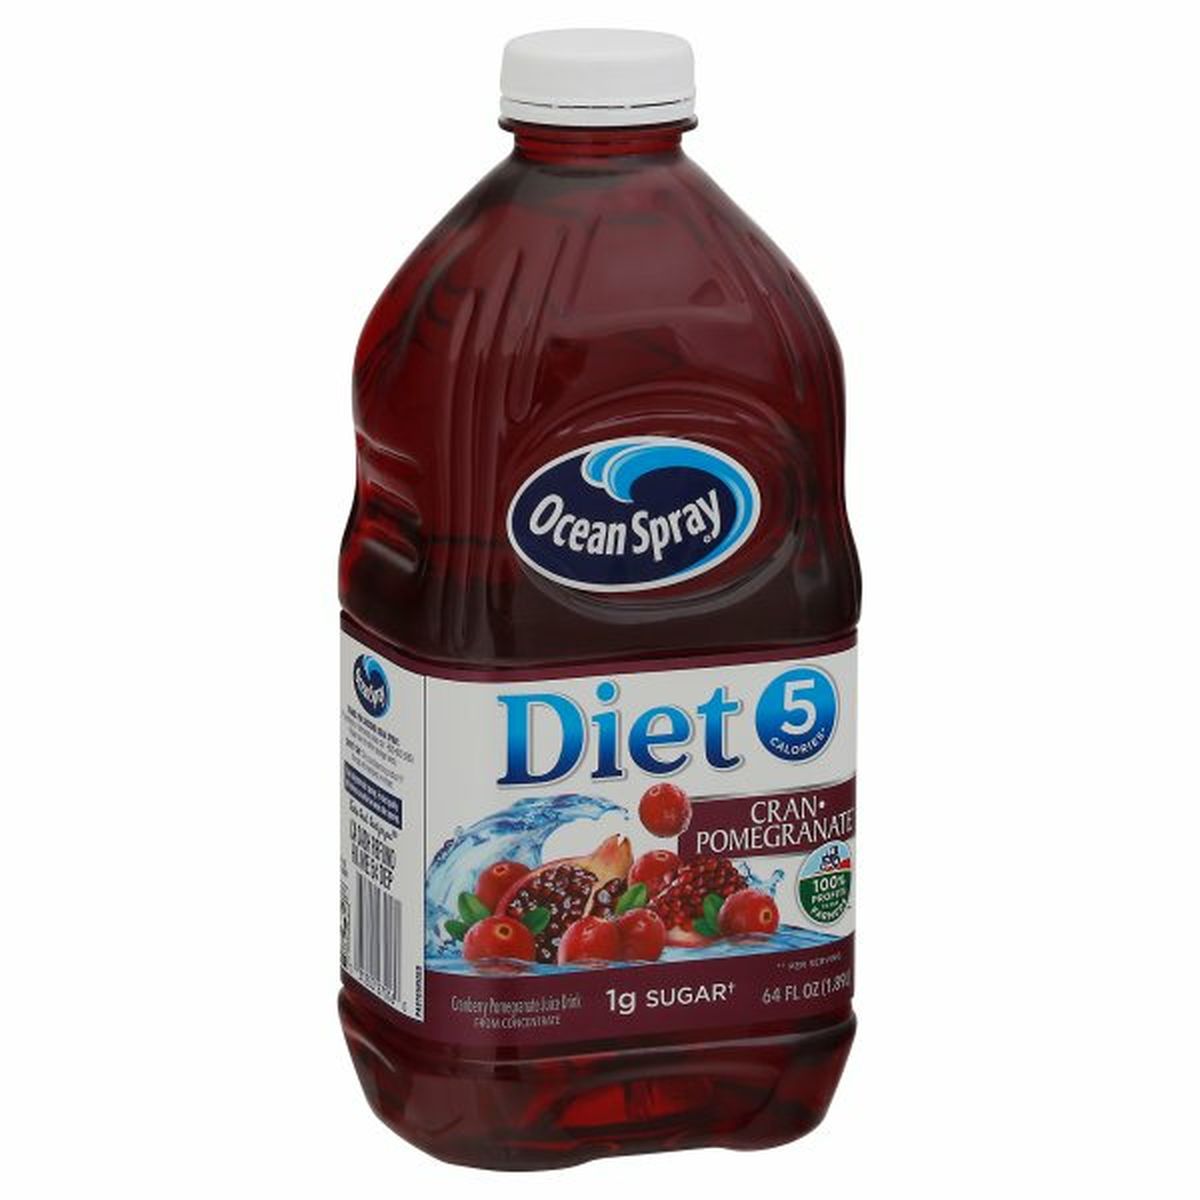 Calories in Ocean Spray Juice Drink, Diet, Cran-Pomegranate